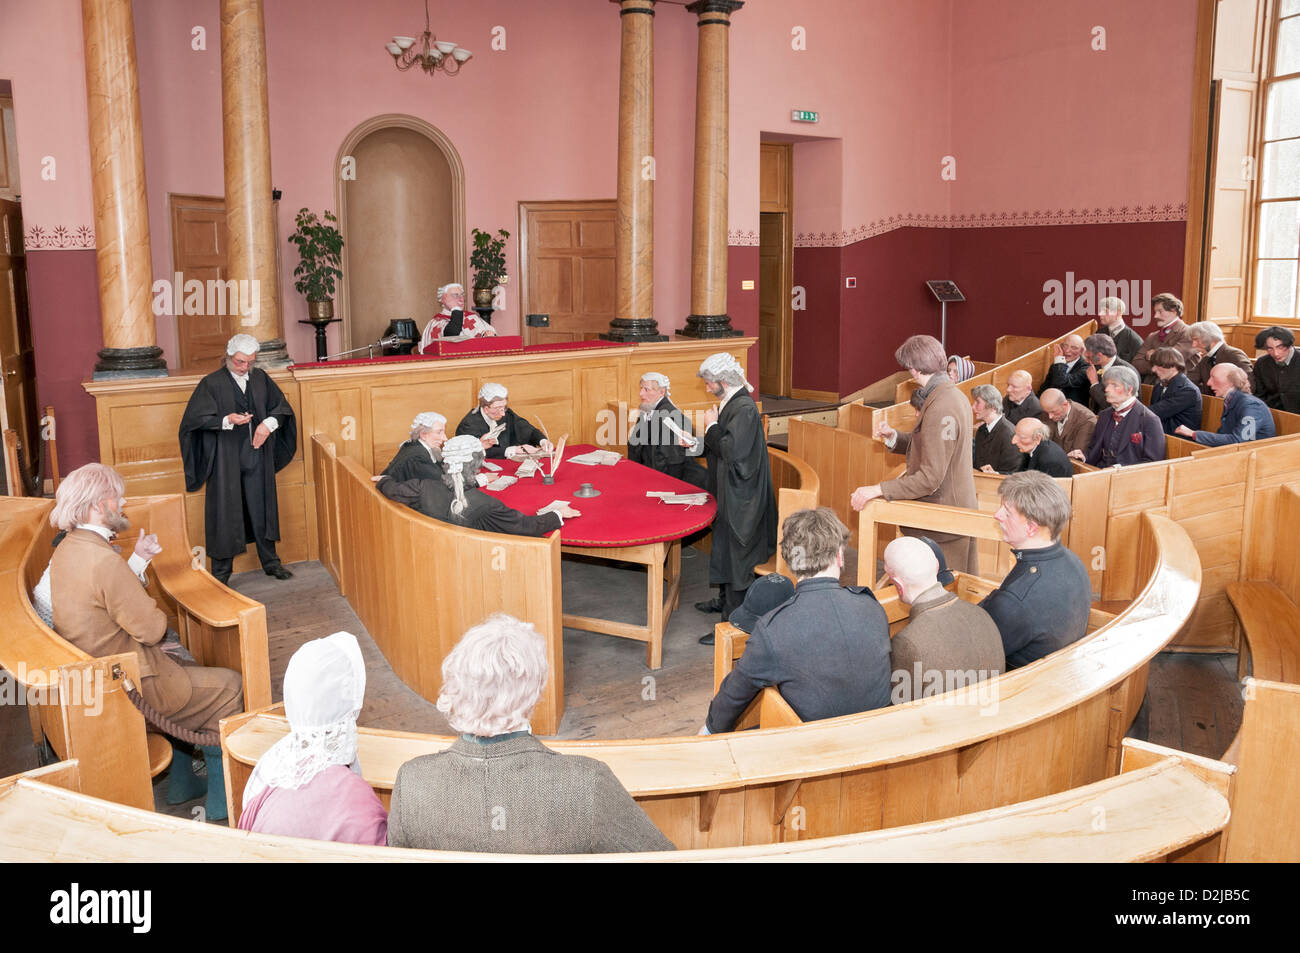 Scotland, Historic Inveraray Jail & County Court, Courthouse, 19C courtroom exhibit Stock Photo